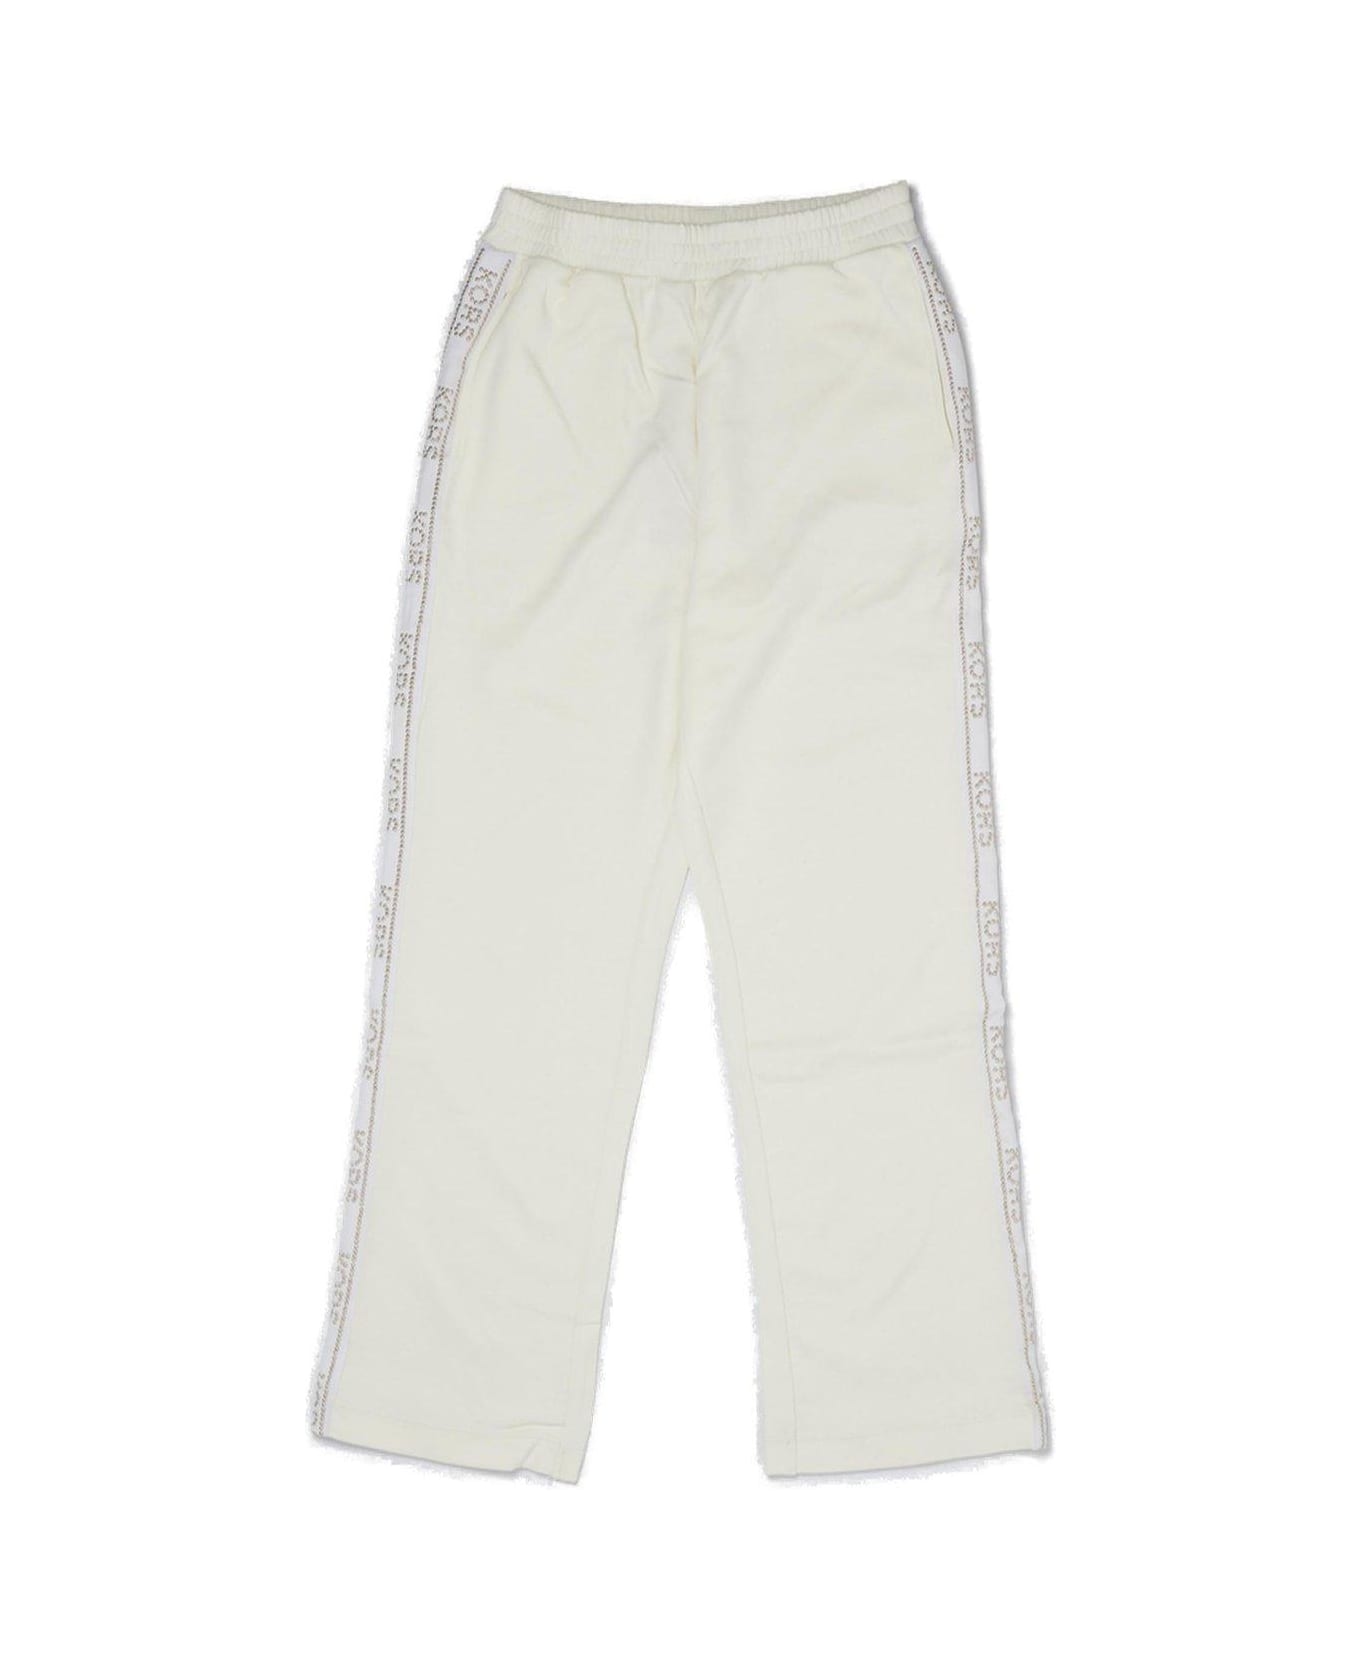 Michael Kors Stud Embellished Jogging Trousers - Crema